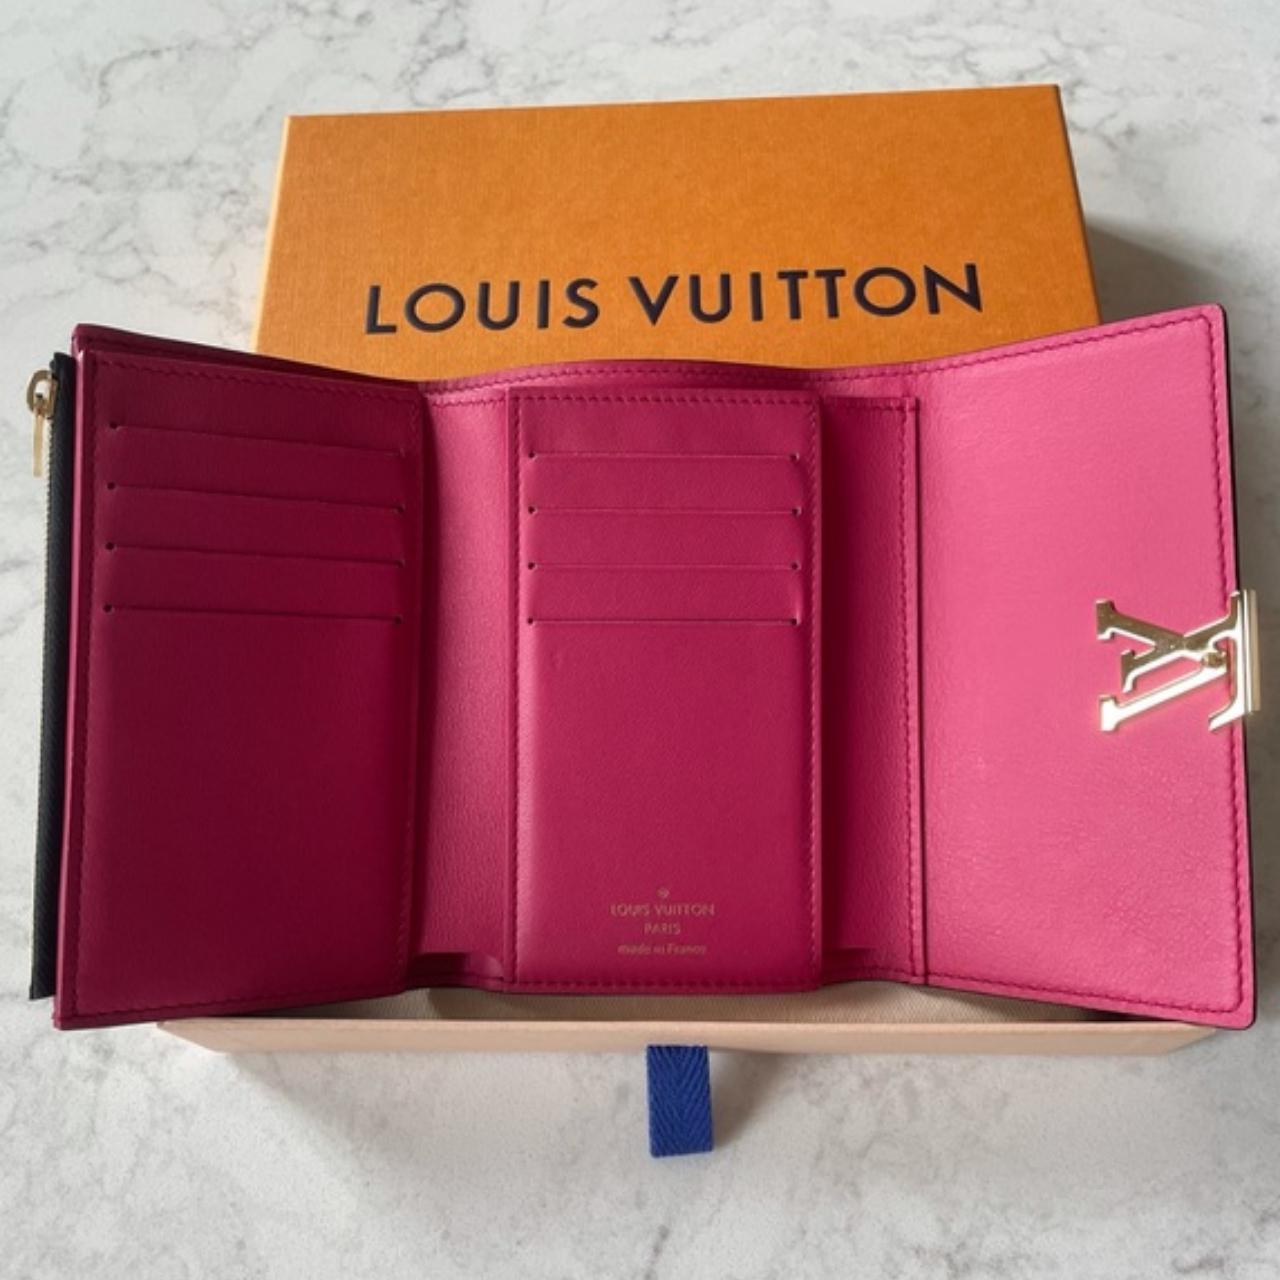 Capucines Compact Wallet Rubis – Luxuria & Co.